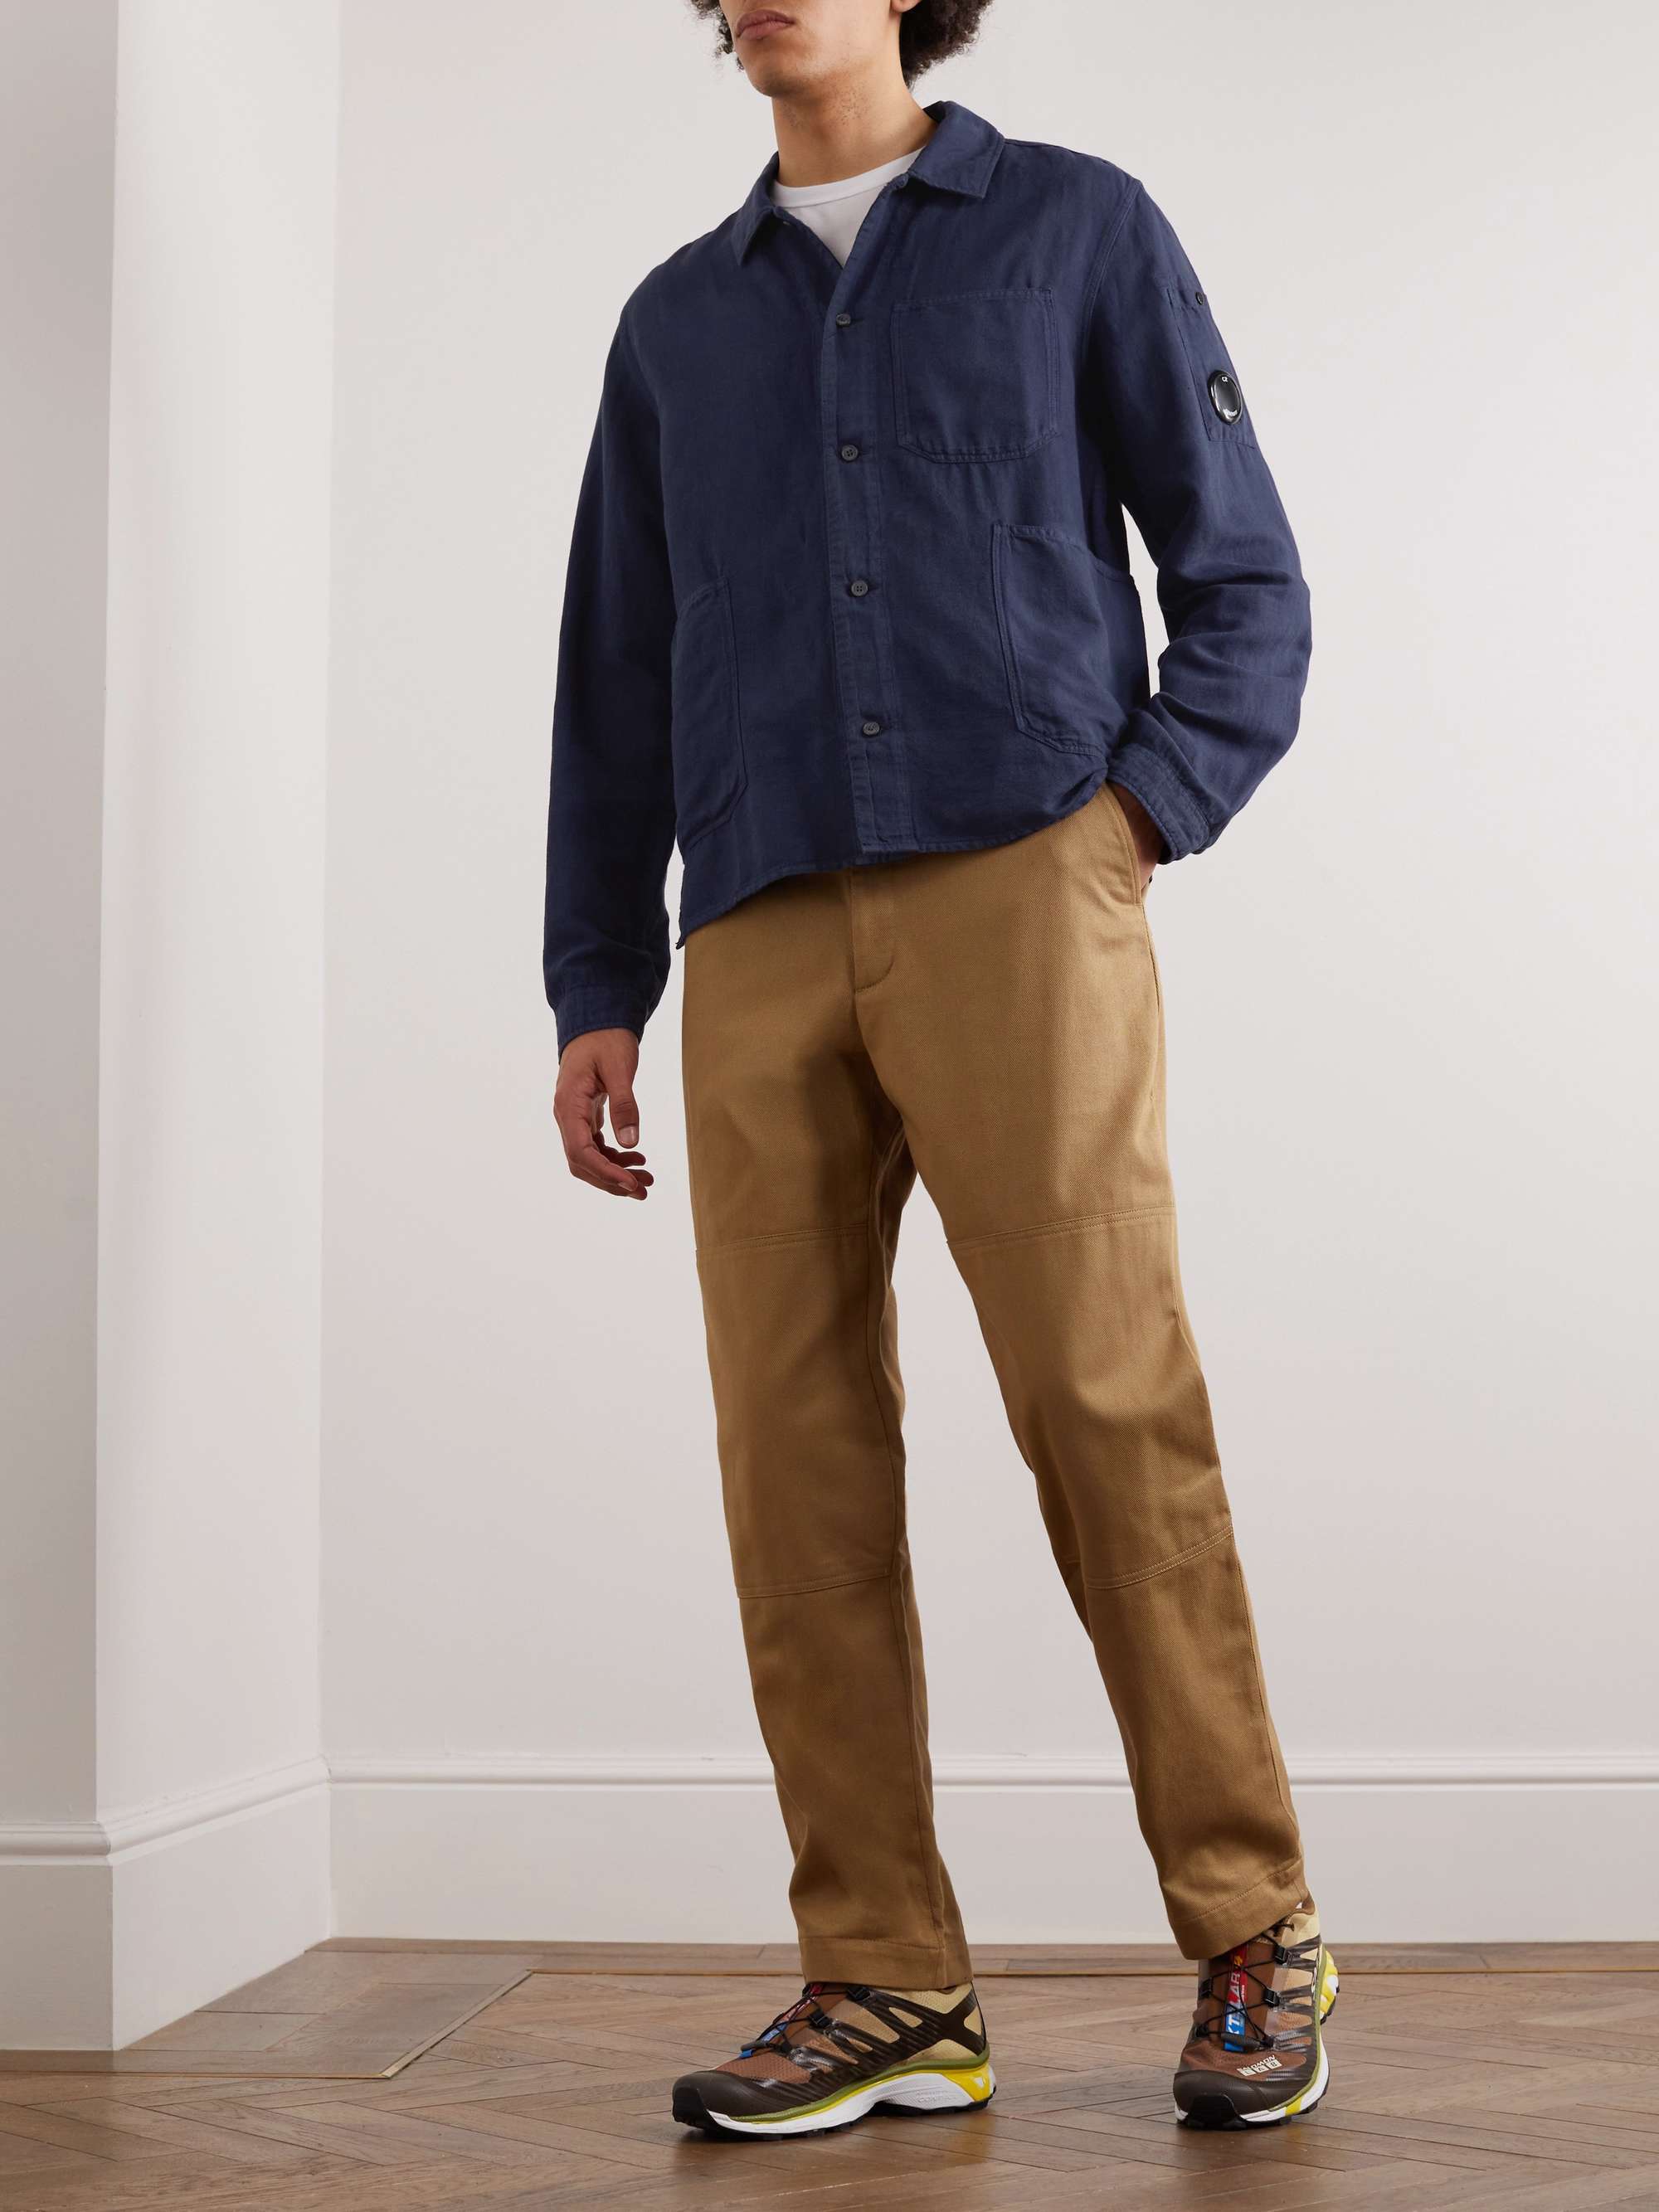 C.P. COMPANY Broken Cotton and Linen-Blend Shirt Jacket